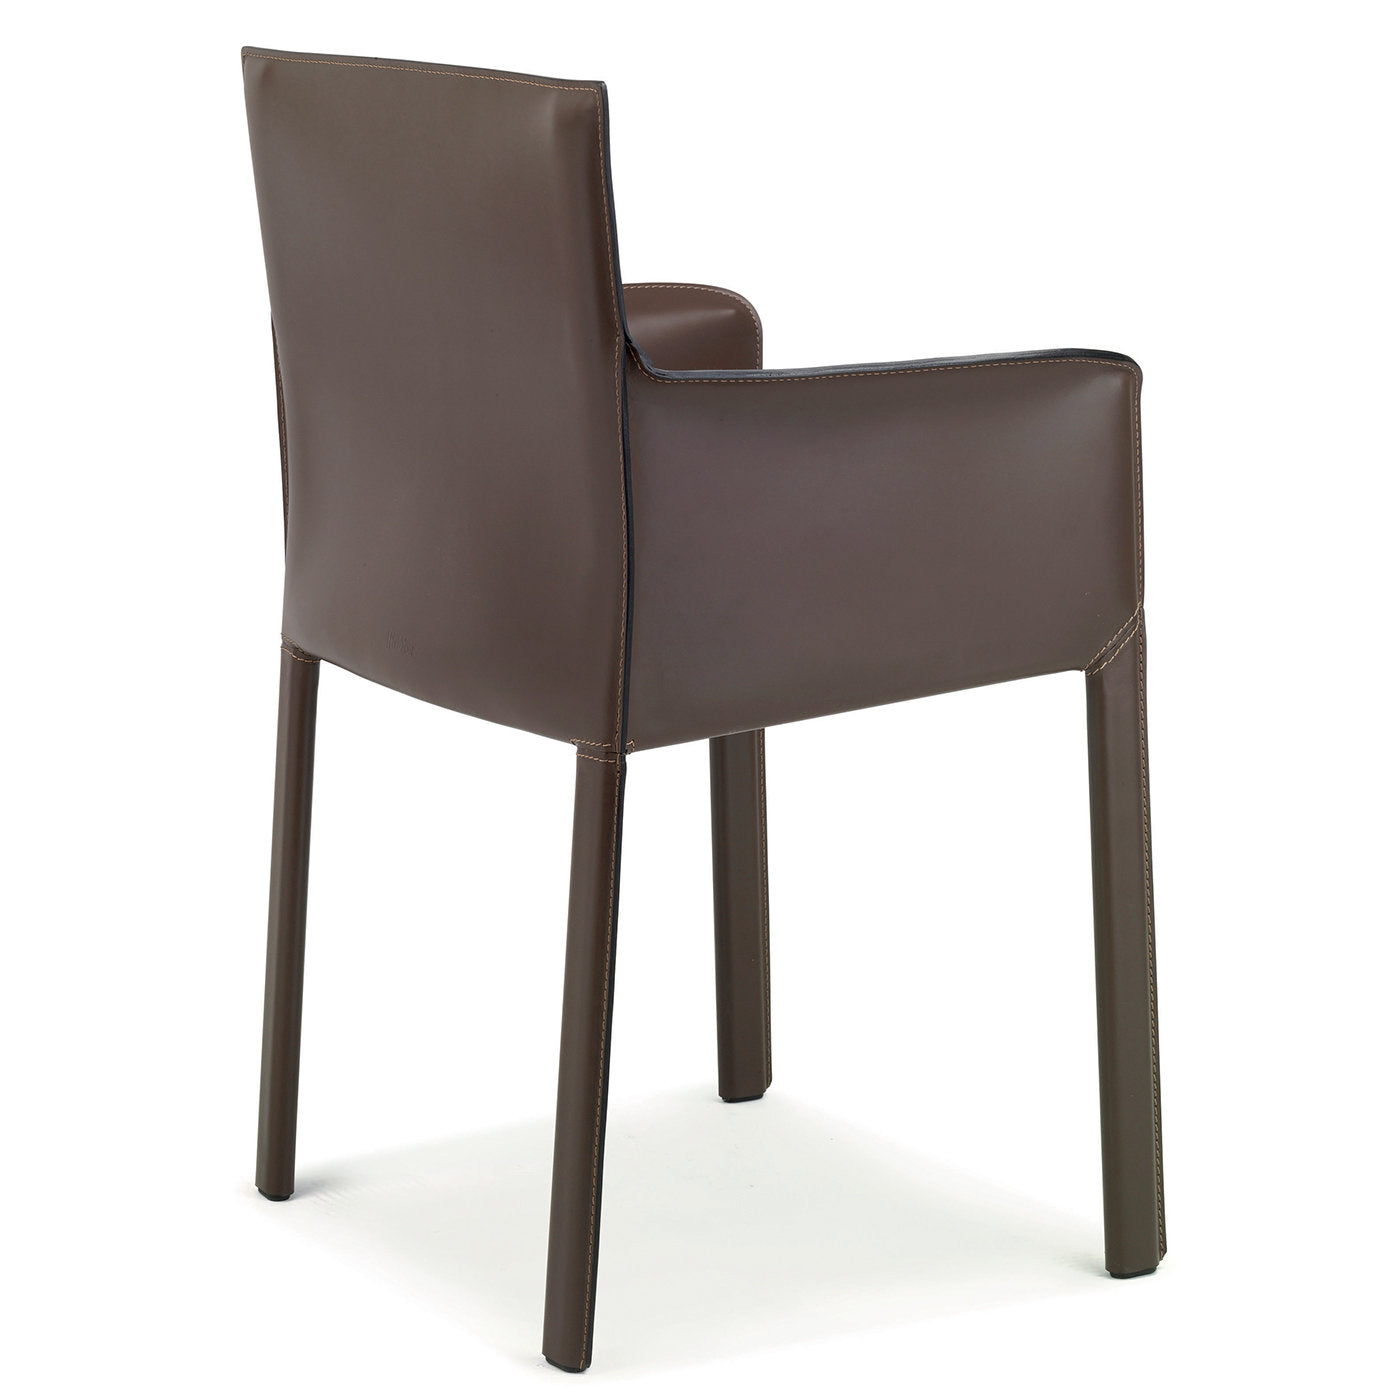 Pasqualina Chair by Grassi&Bianchi - Alternative view 3